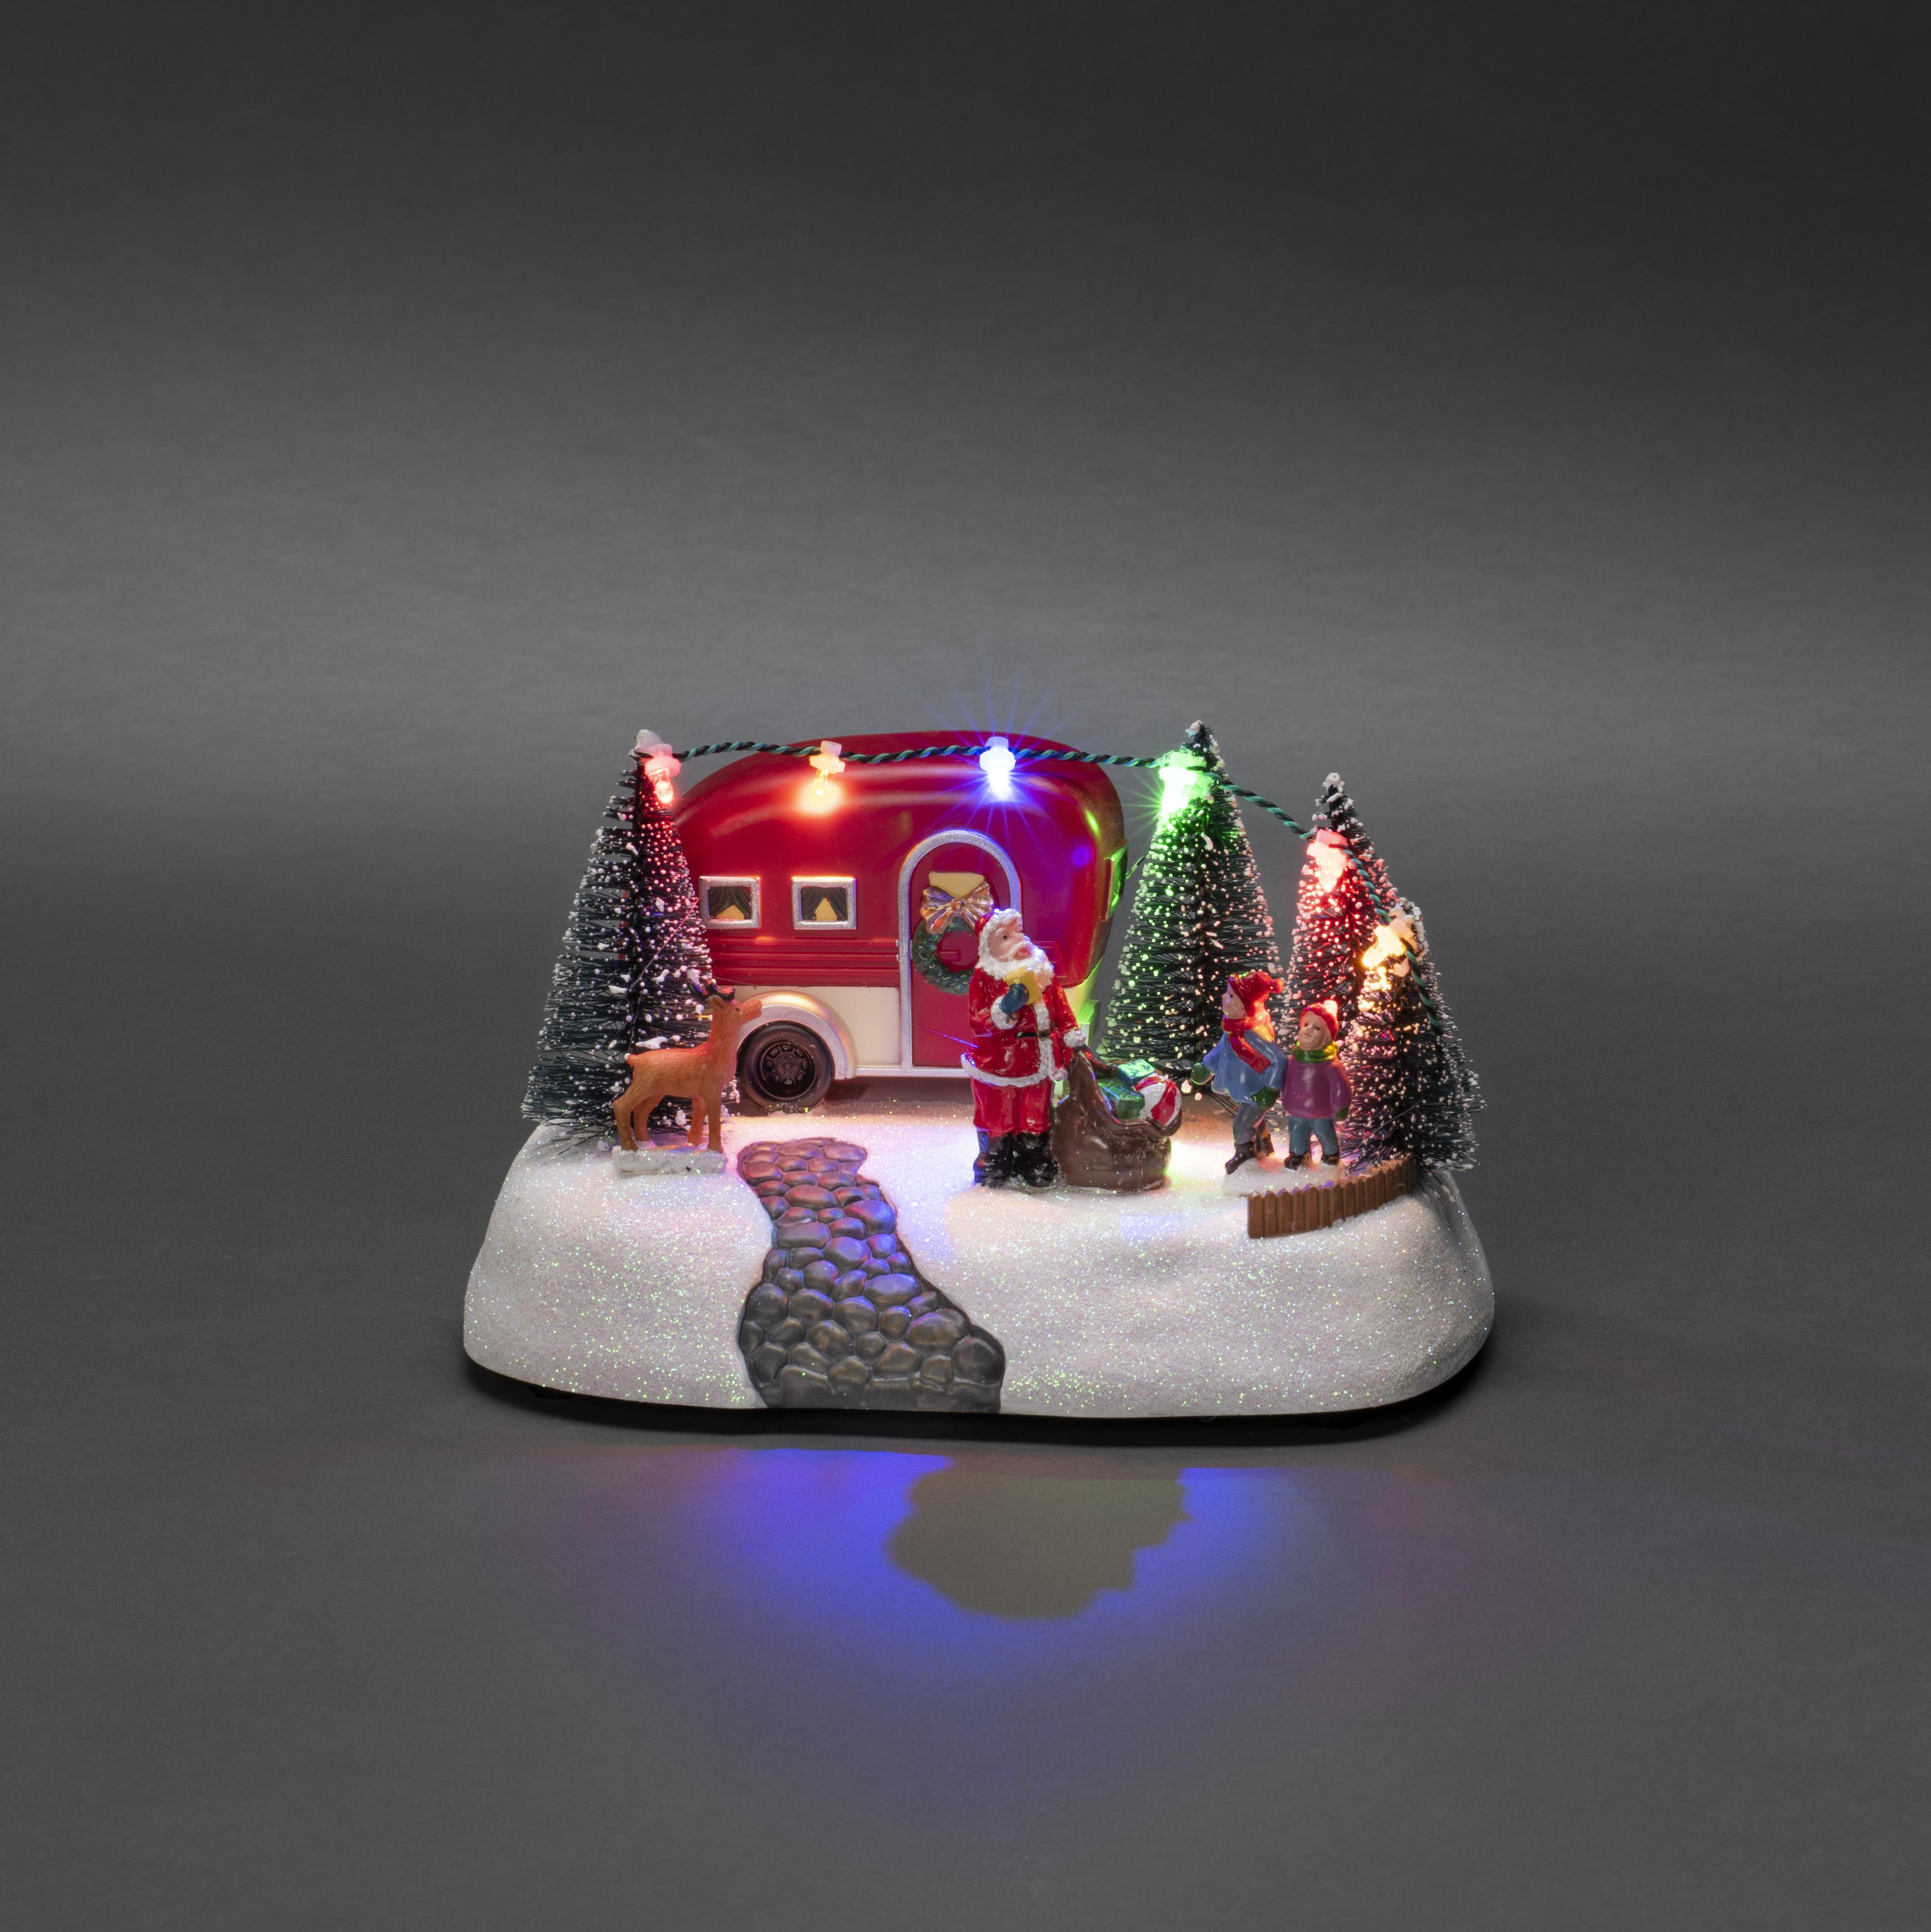 LED 6 KONSTSMIDE Mehrfarbig Wohnwagen, 4238-000 Dioden Bunt, Weihnachtsbeleuchtung, Bunte